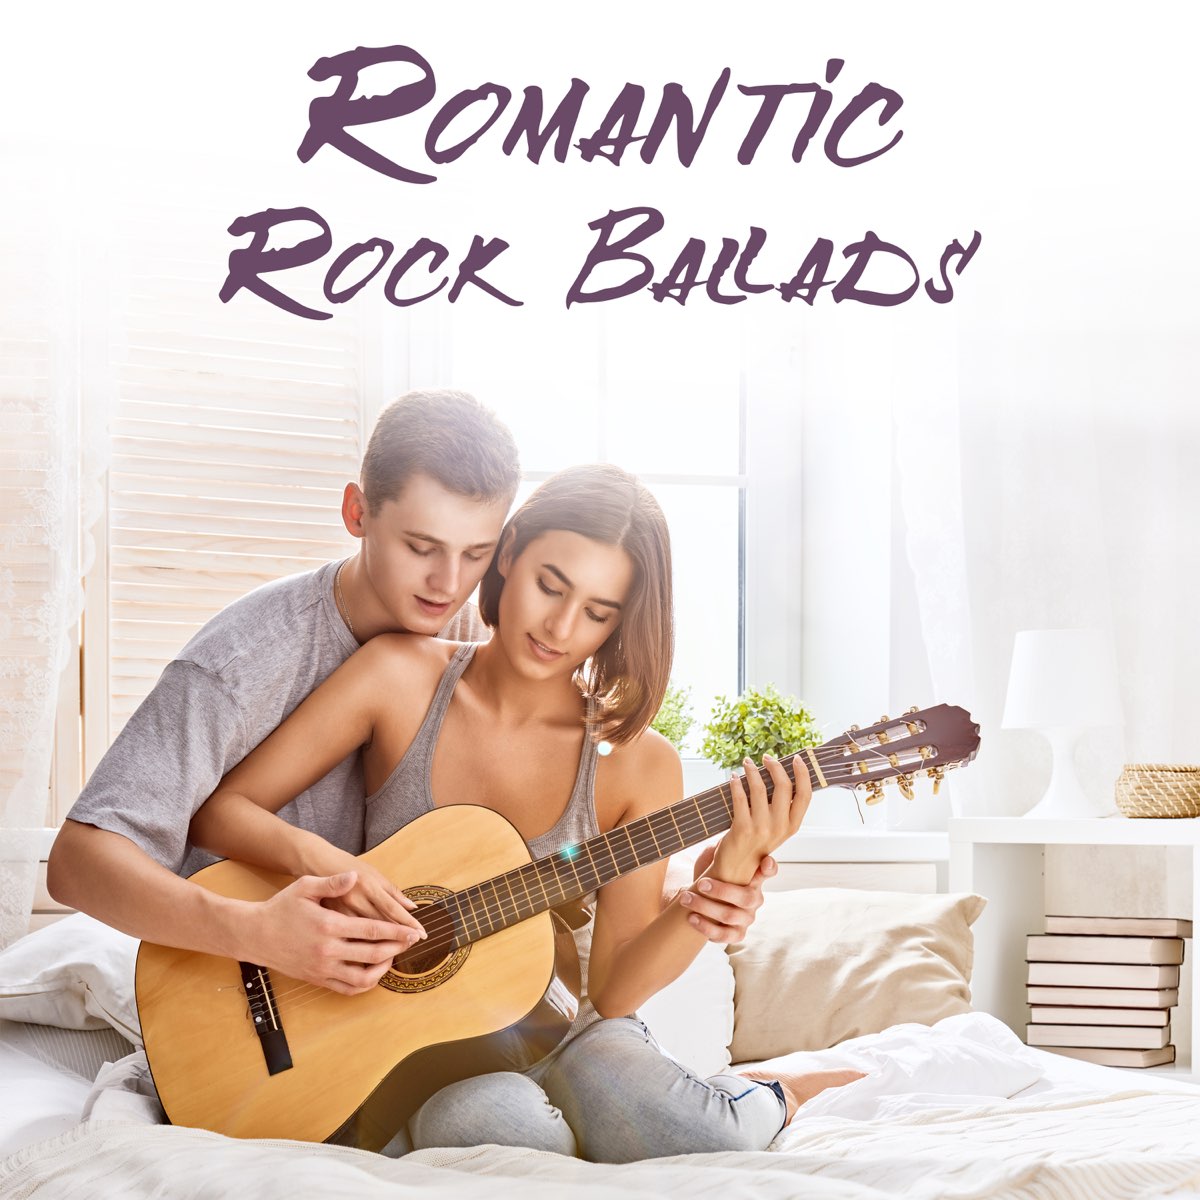 Обложка романтика. Романтичный рок. Romantic Ballads. Romantic collection обложки. Обложка романтического альбома.